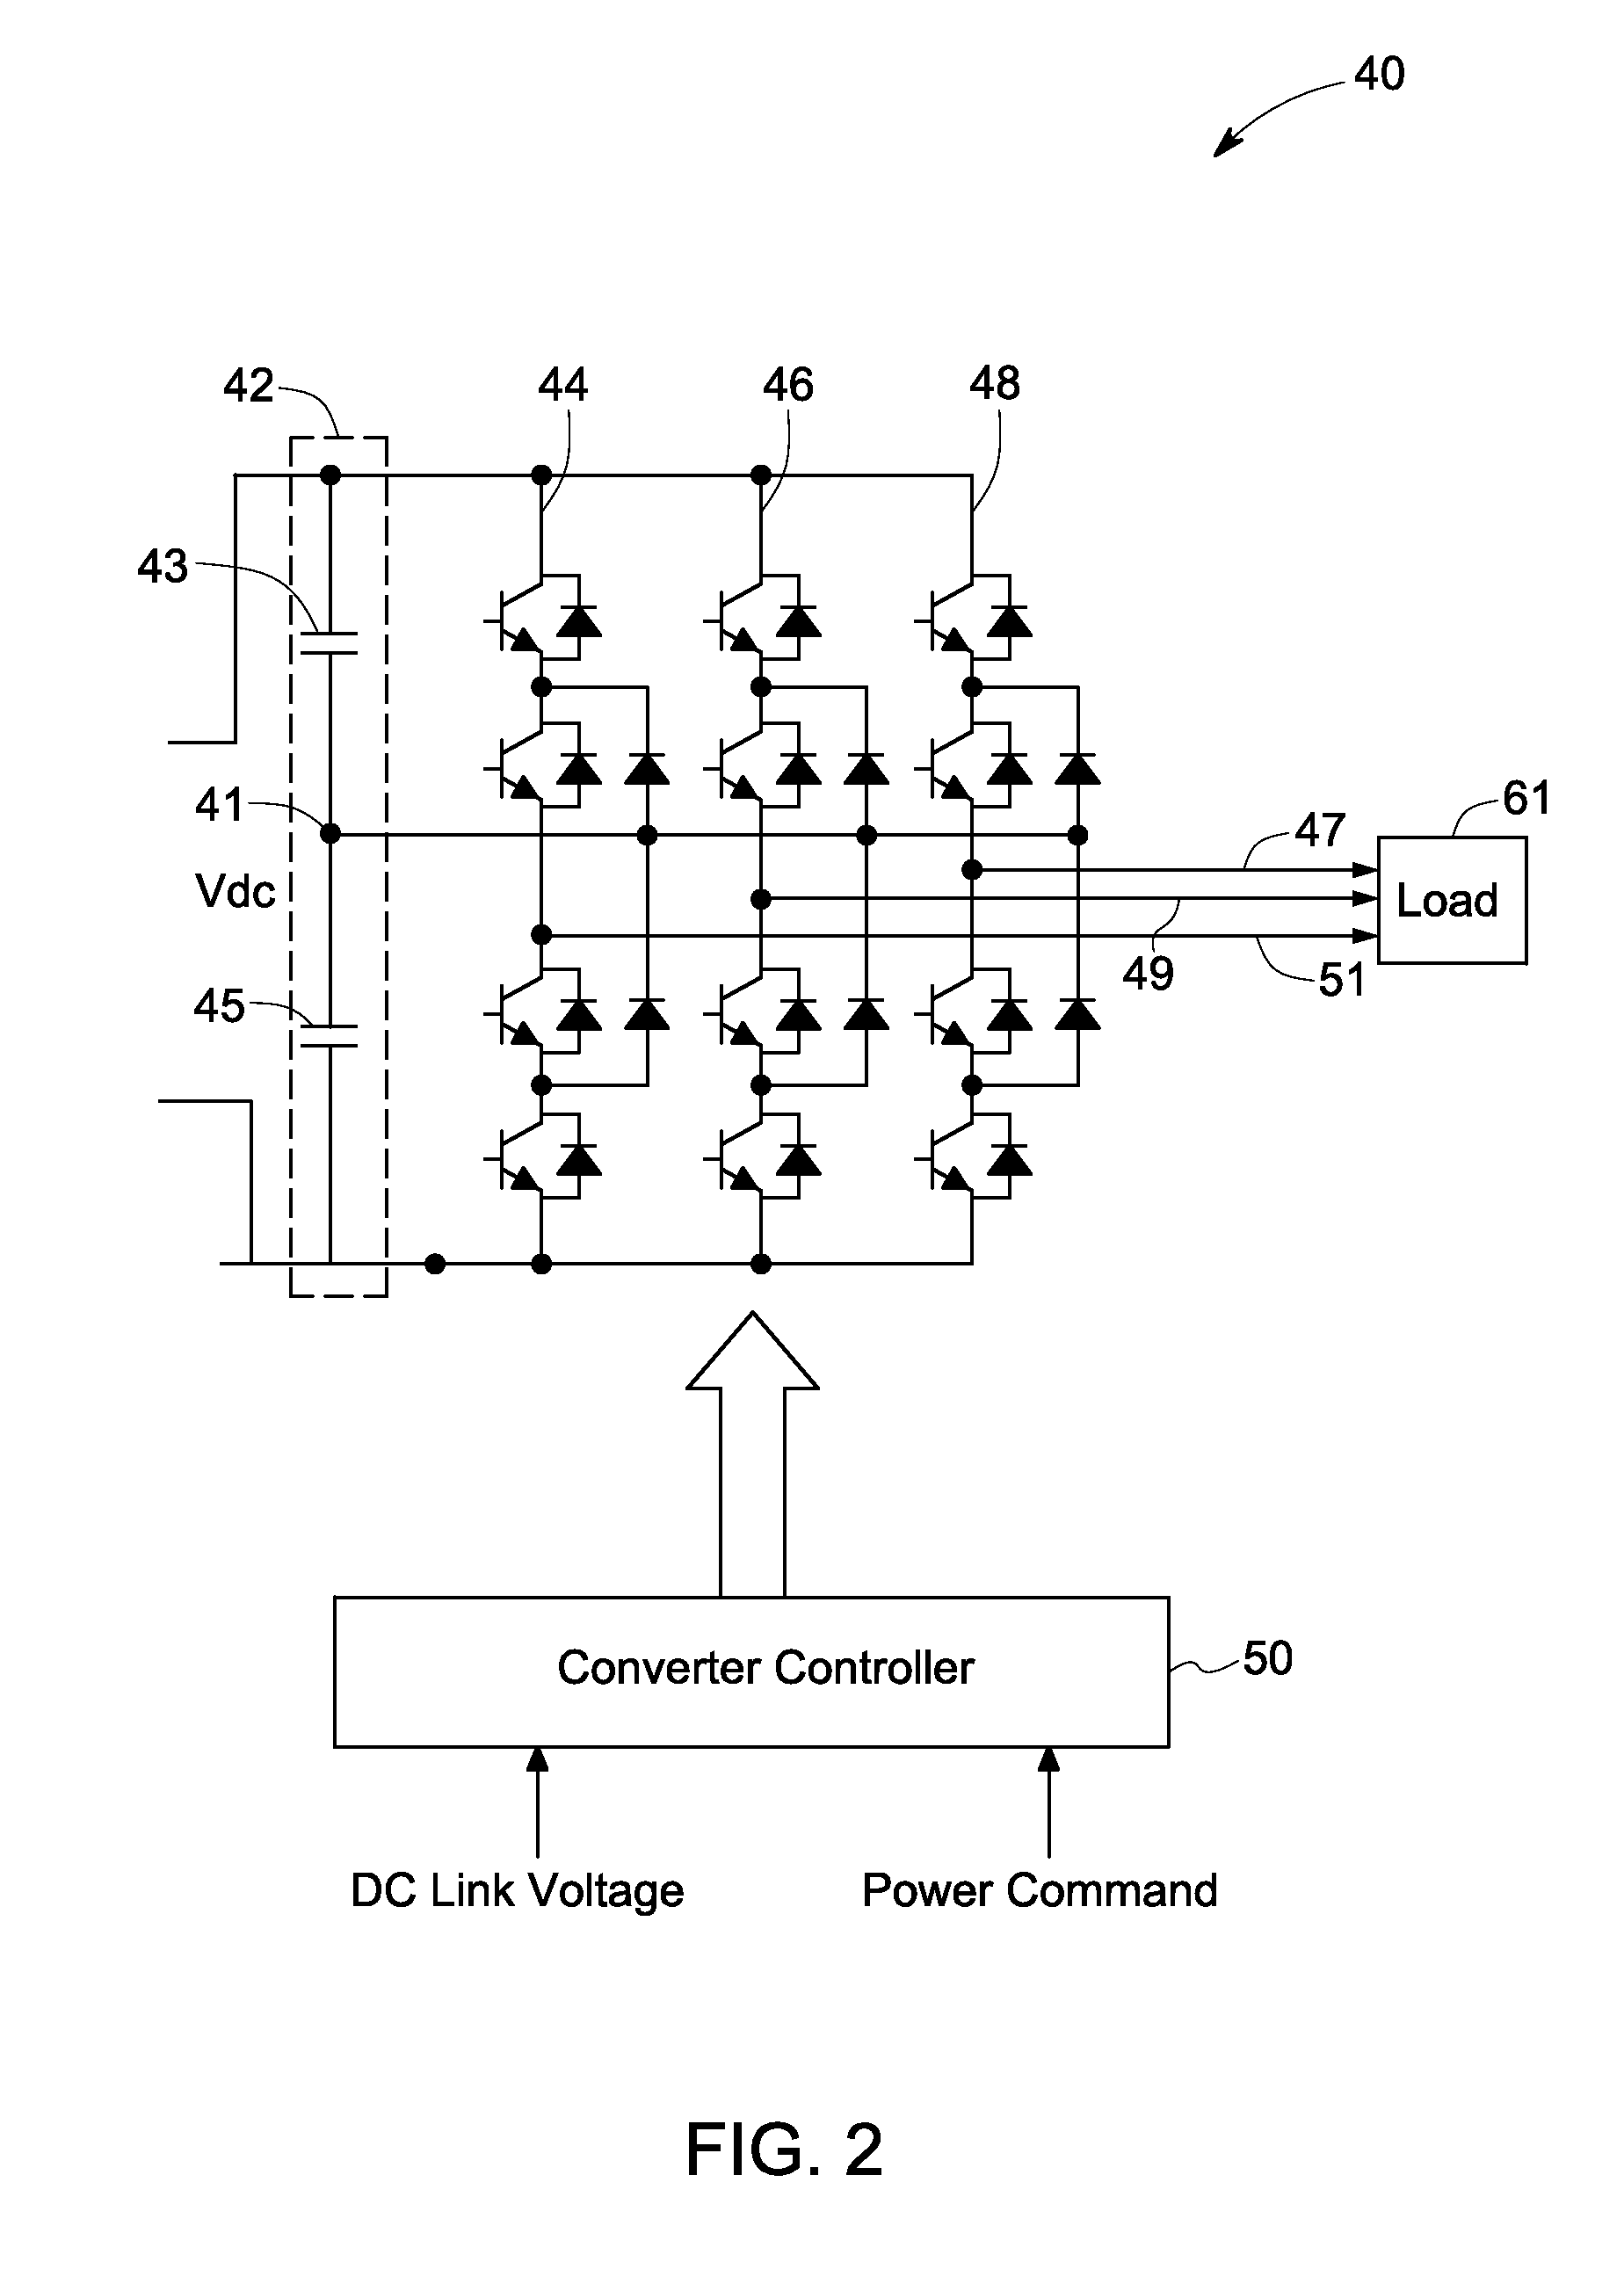 DC-link voltage balancing system and method for multilevel converters